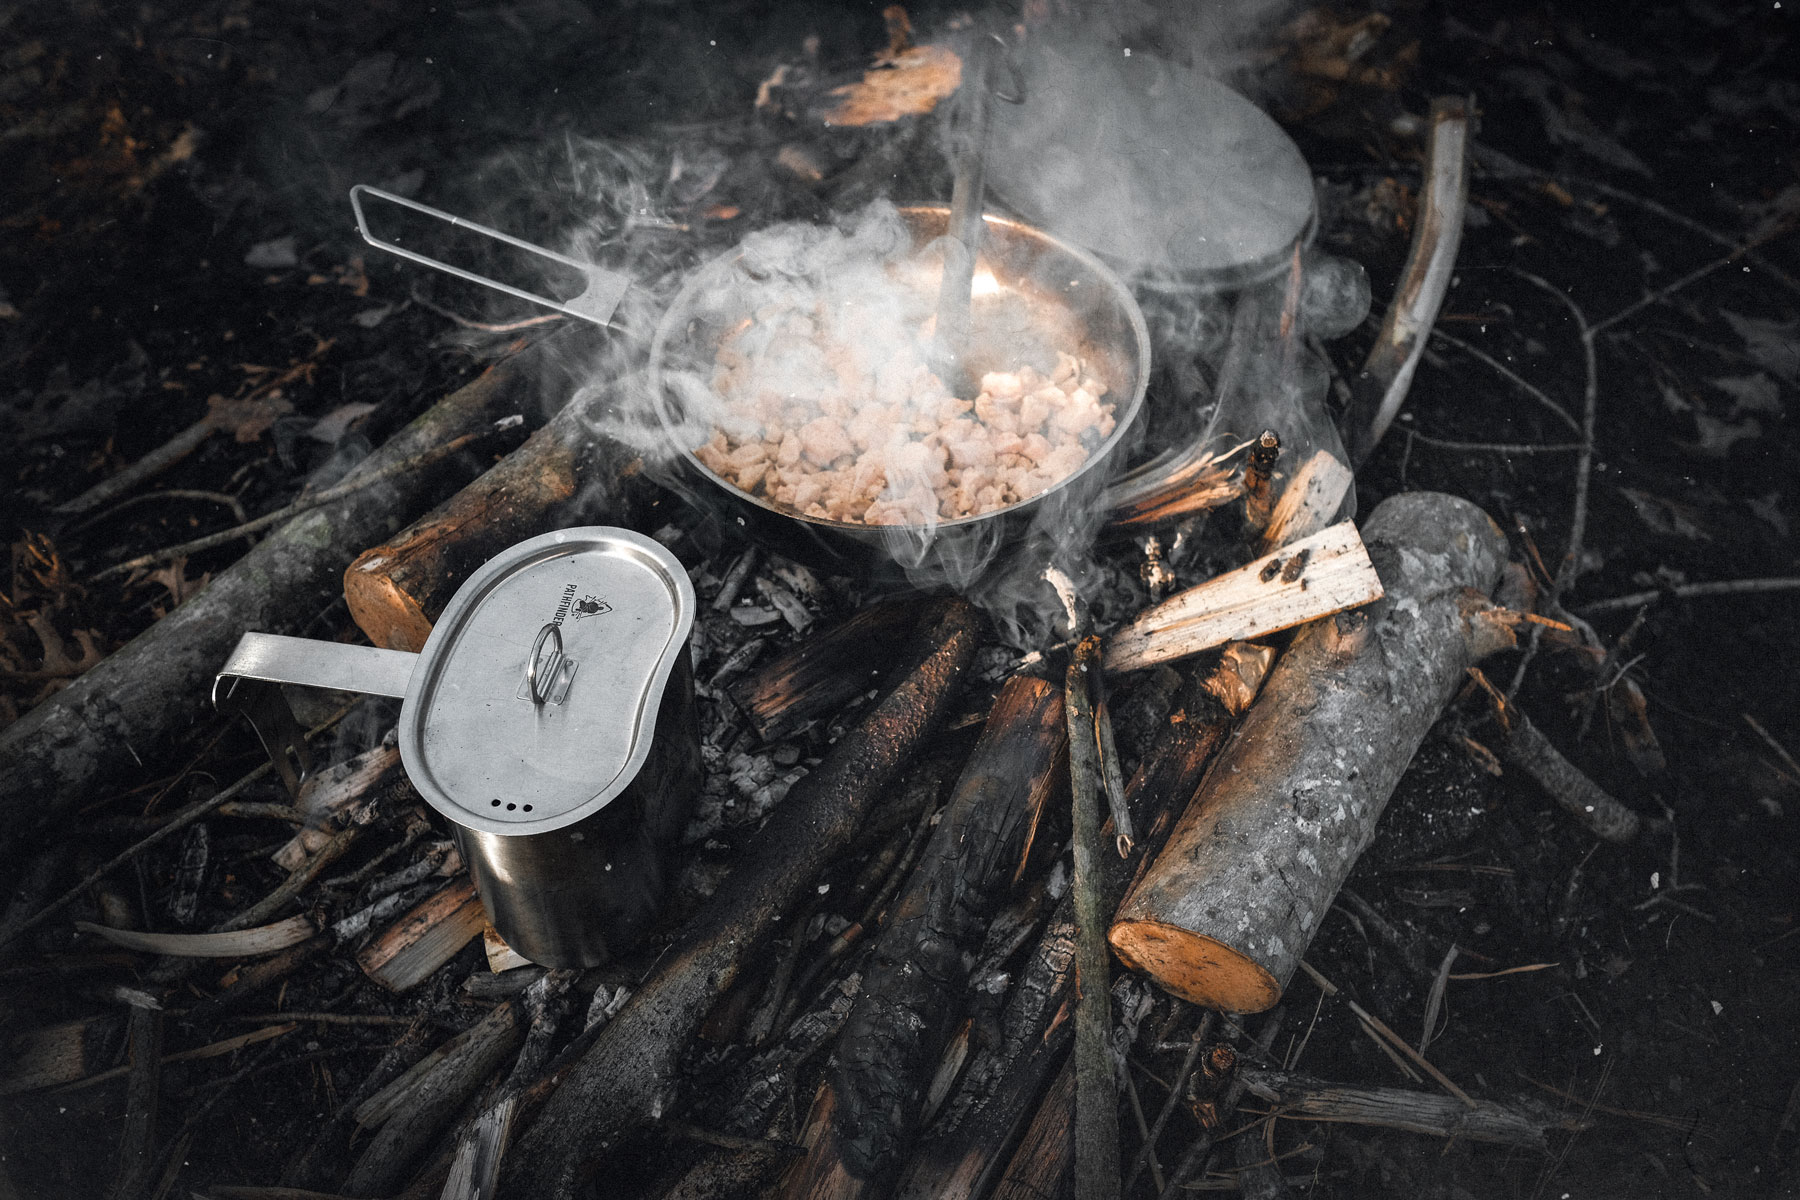 https://anthonyawaken.com/wp-content/uploads/2019/01/campfire-survival-cooking-kit.jpg